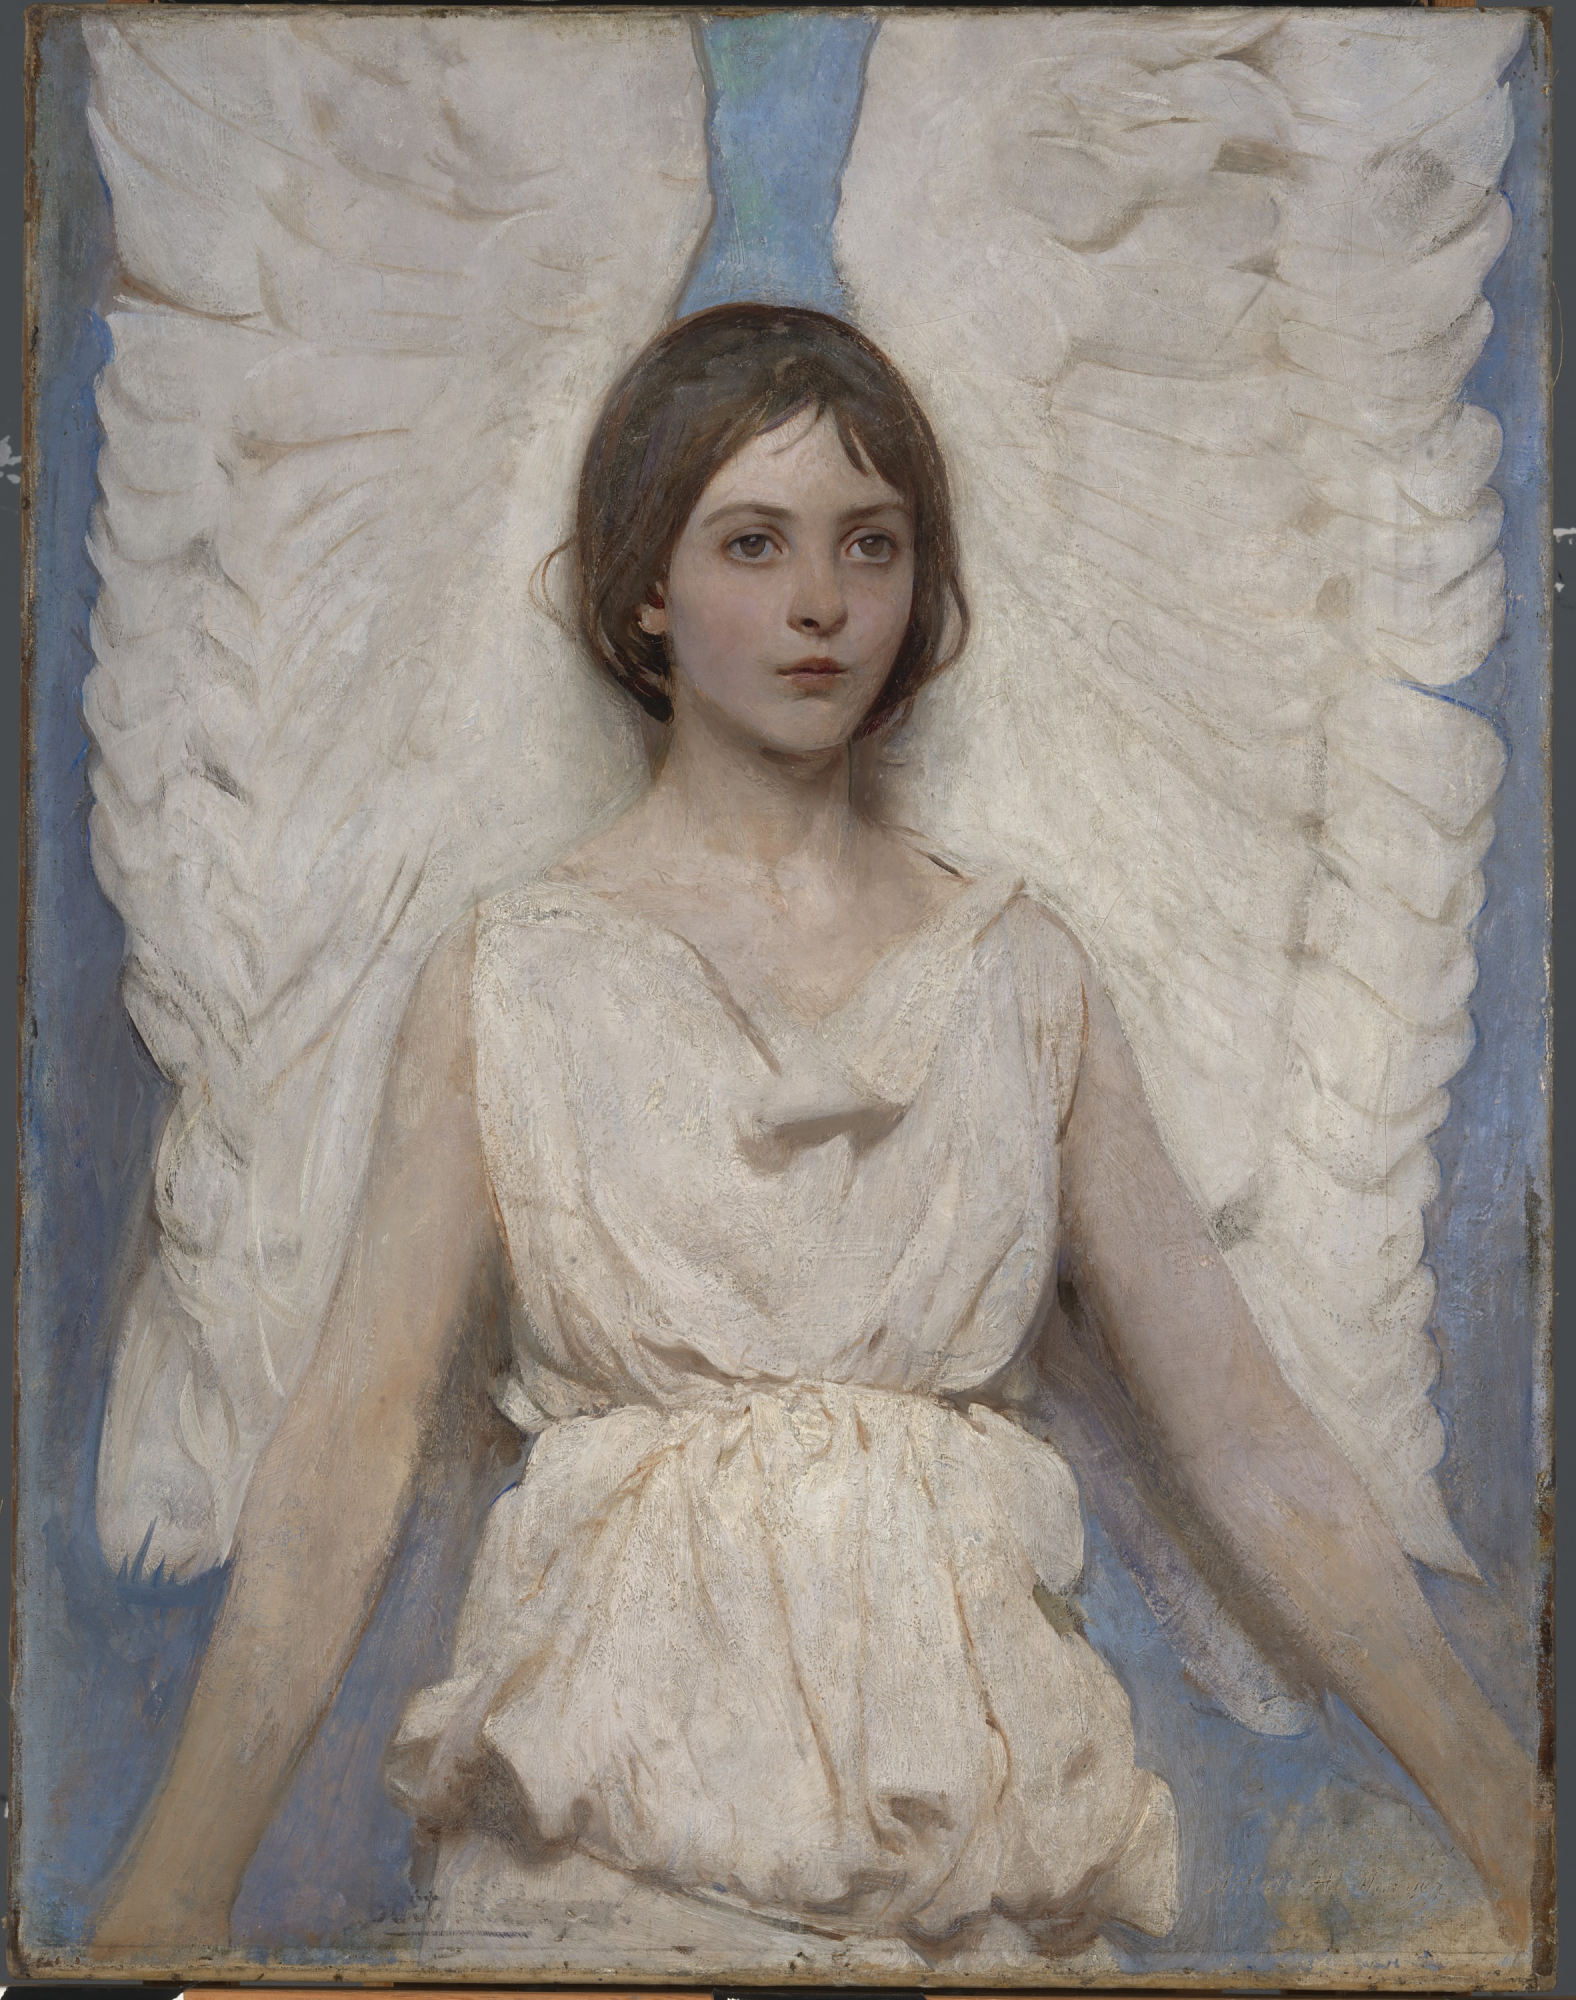 Angel by Abbott Handerson Thayer - 1887 - 92.0 x 71.5 cm Smithsonian American Art Museum